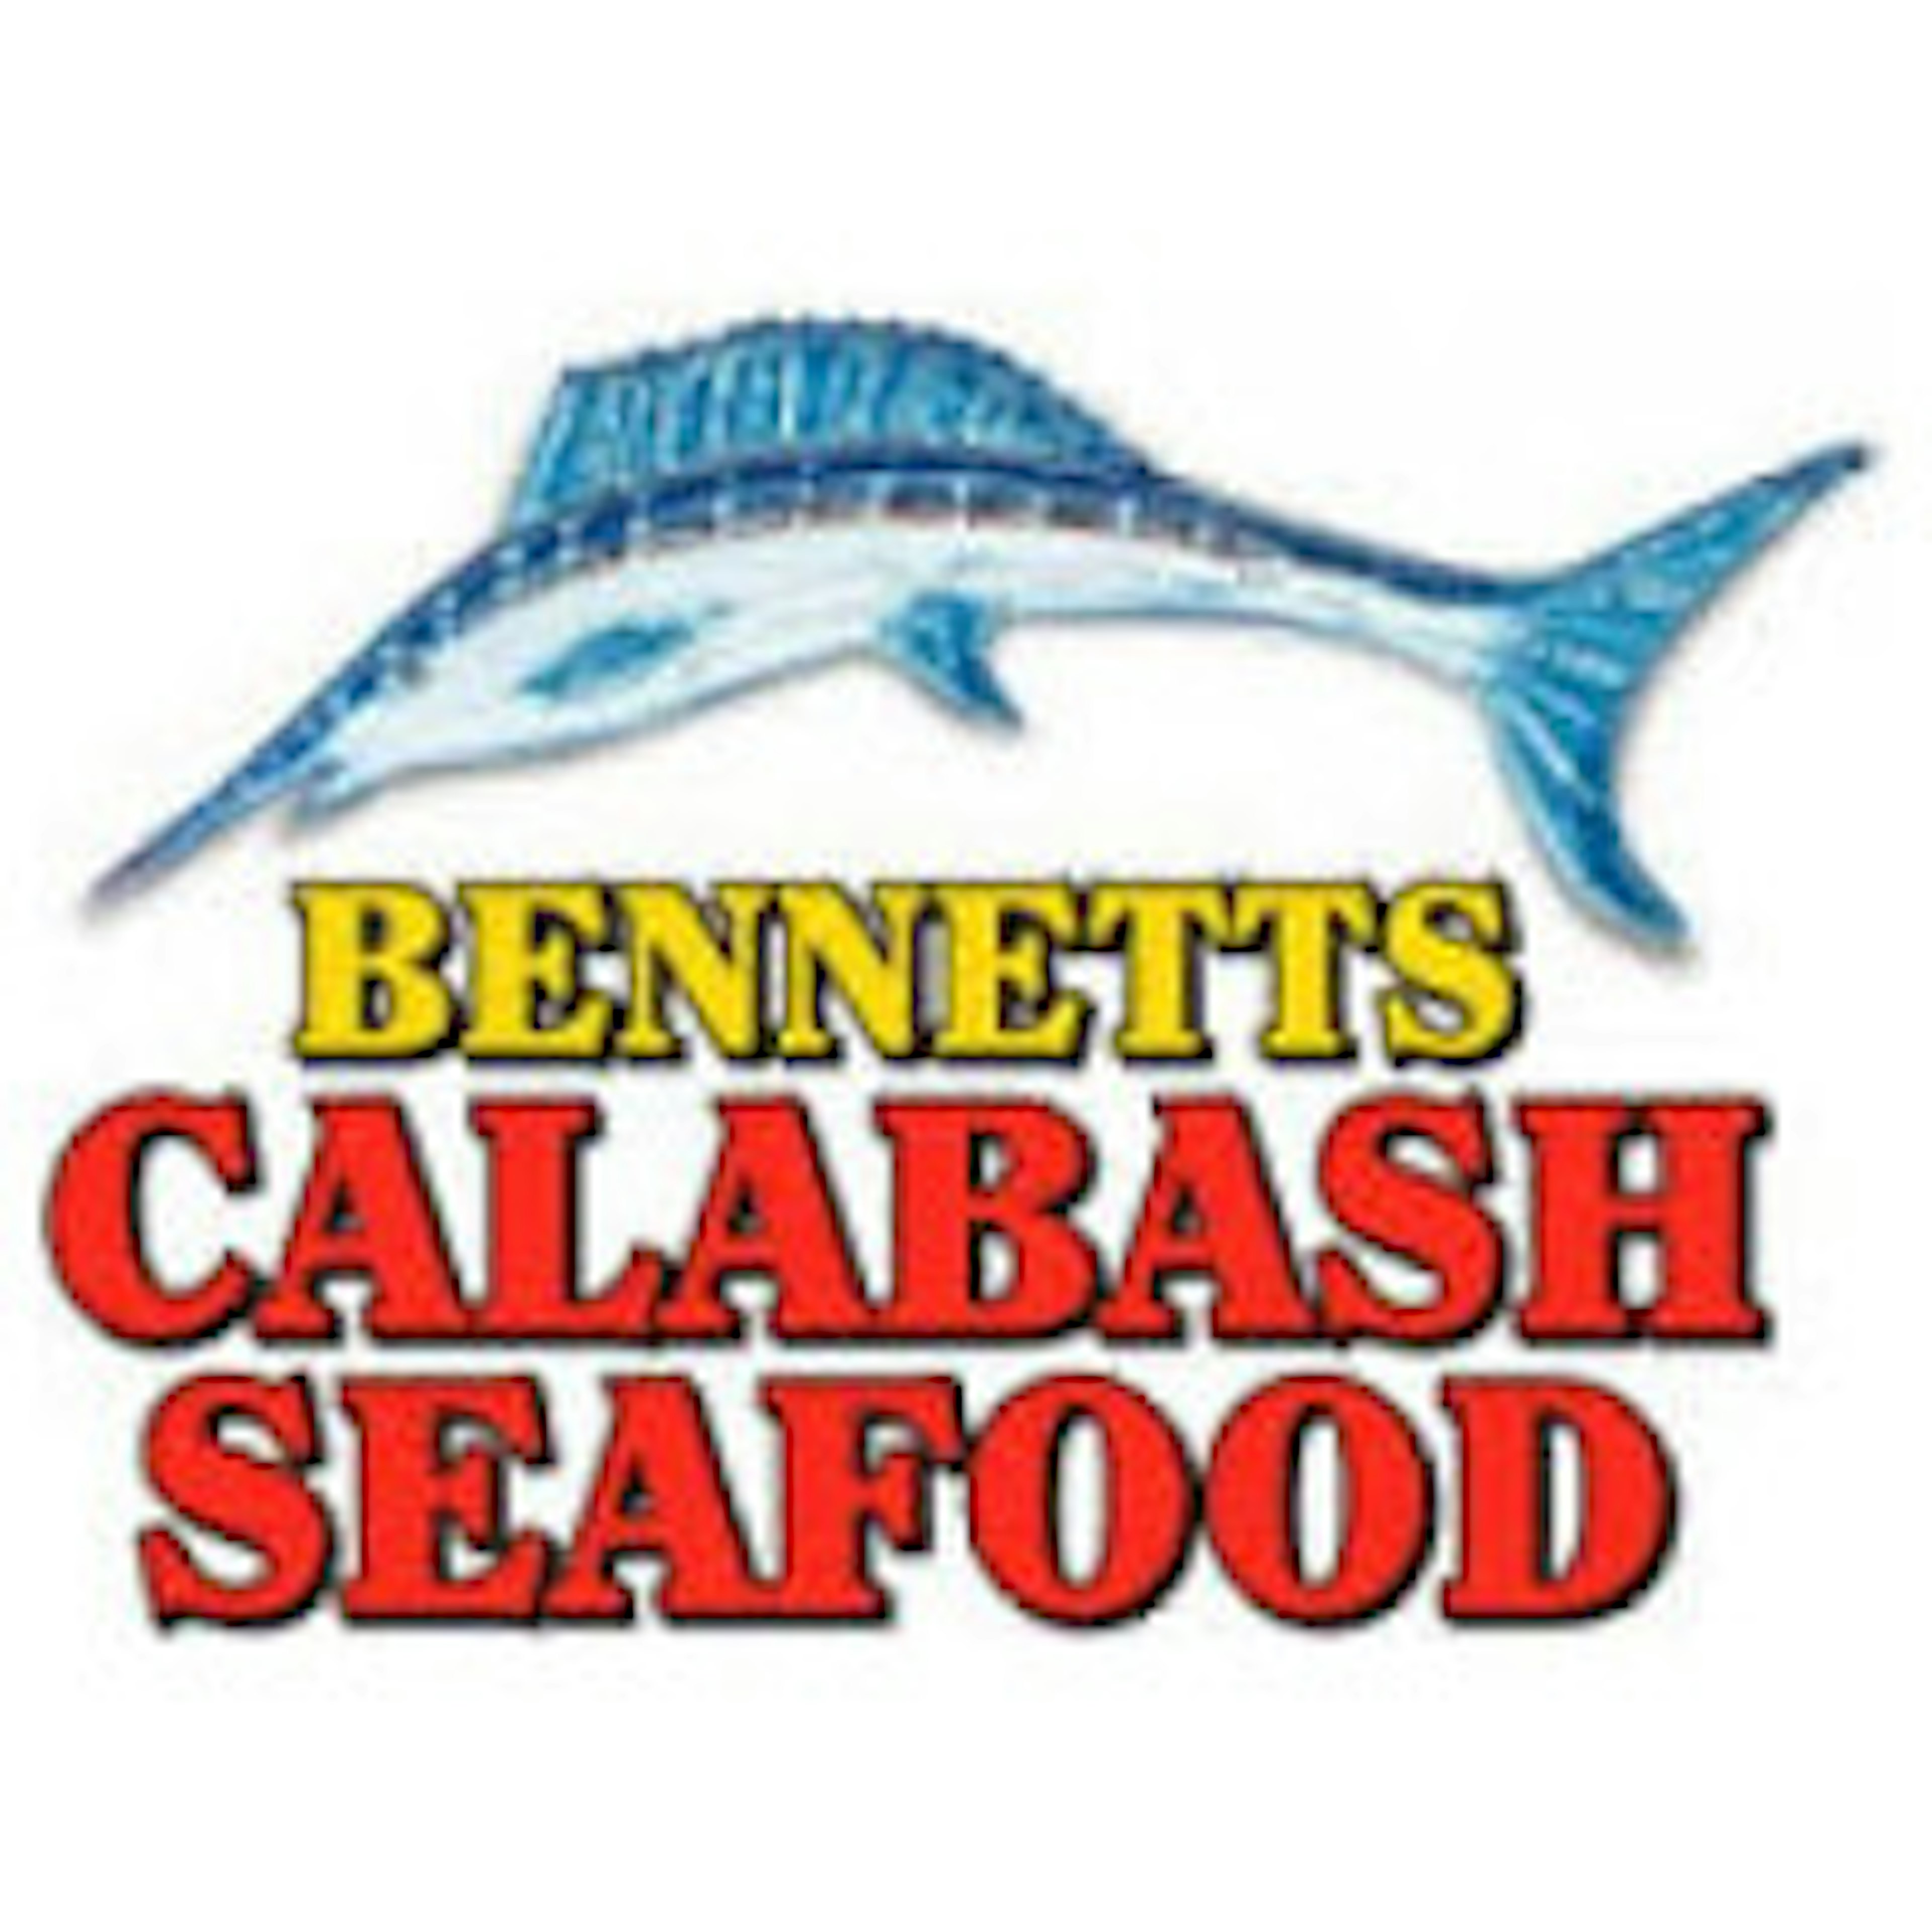 Bennetts Calabash Seafood